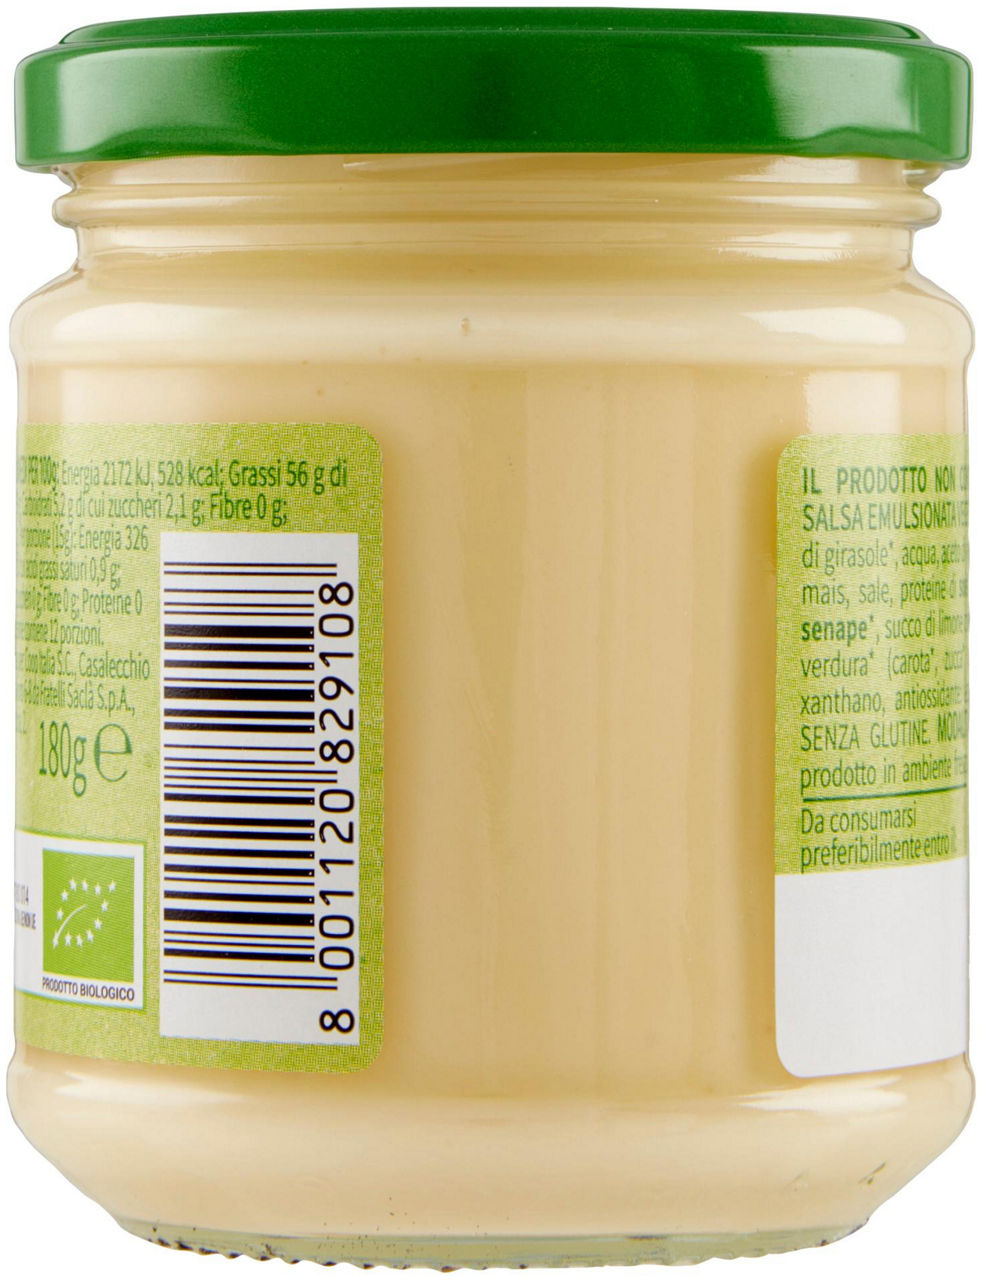 maionese senza uova Biologica Vivi Verde 180 g - 2